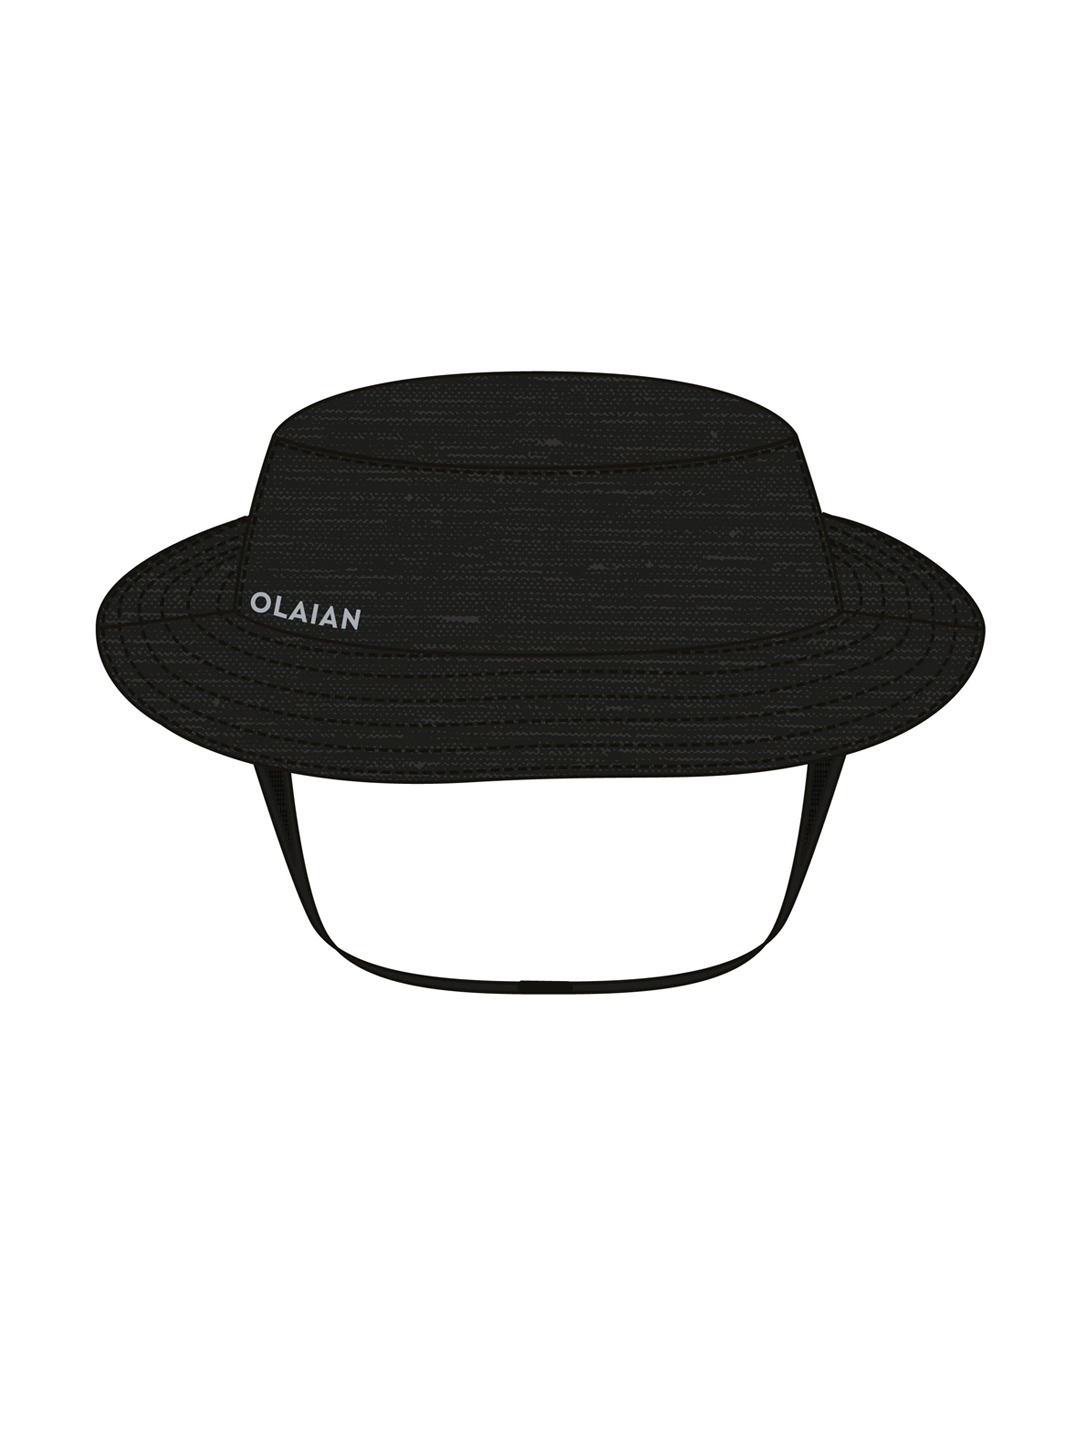 Accessories Hat | OLAIAN By Decathlon Men Black Surf Hat - BU12001